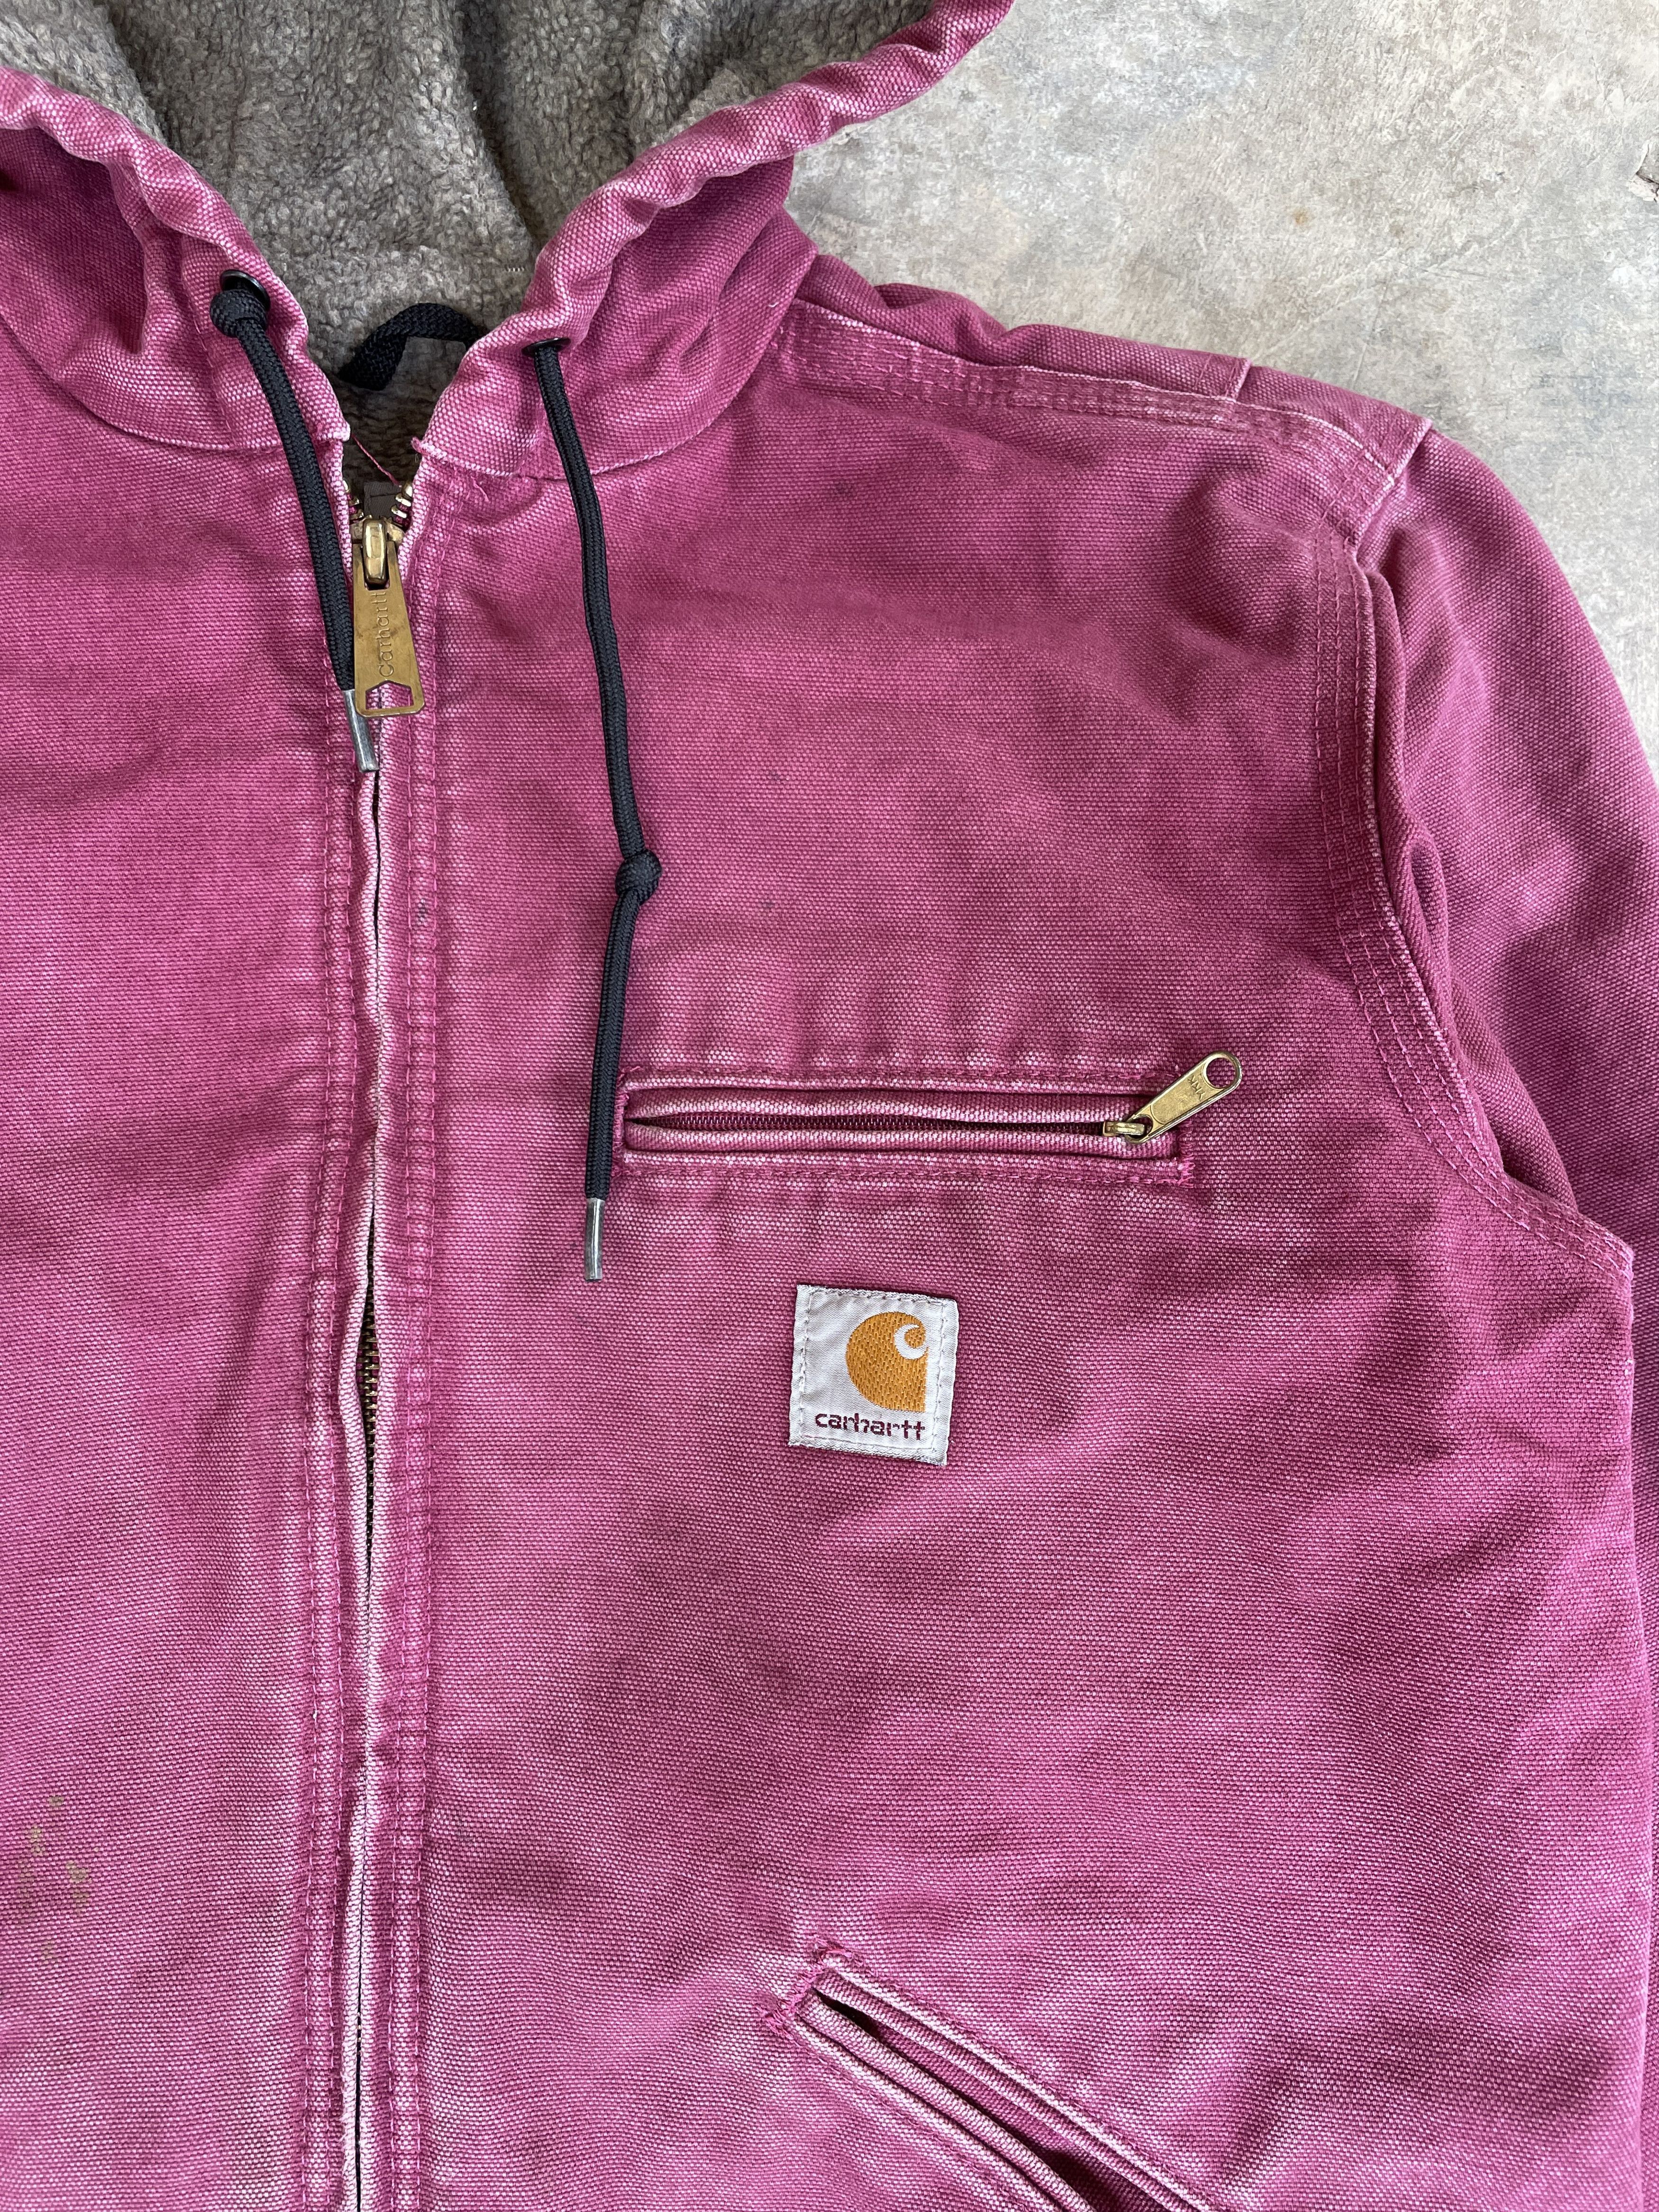 Vintage 1990s Sun Faded Pink Carhartt Jacket Size US S / EU 44-46 / 1 - 4 Thumbnail